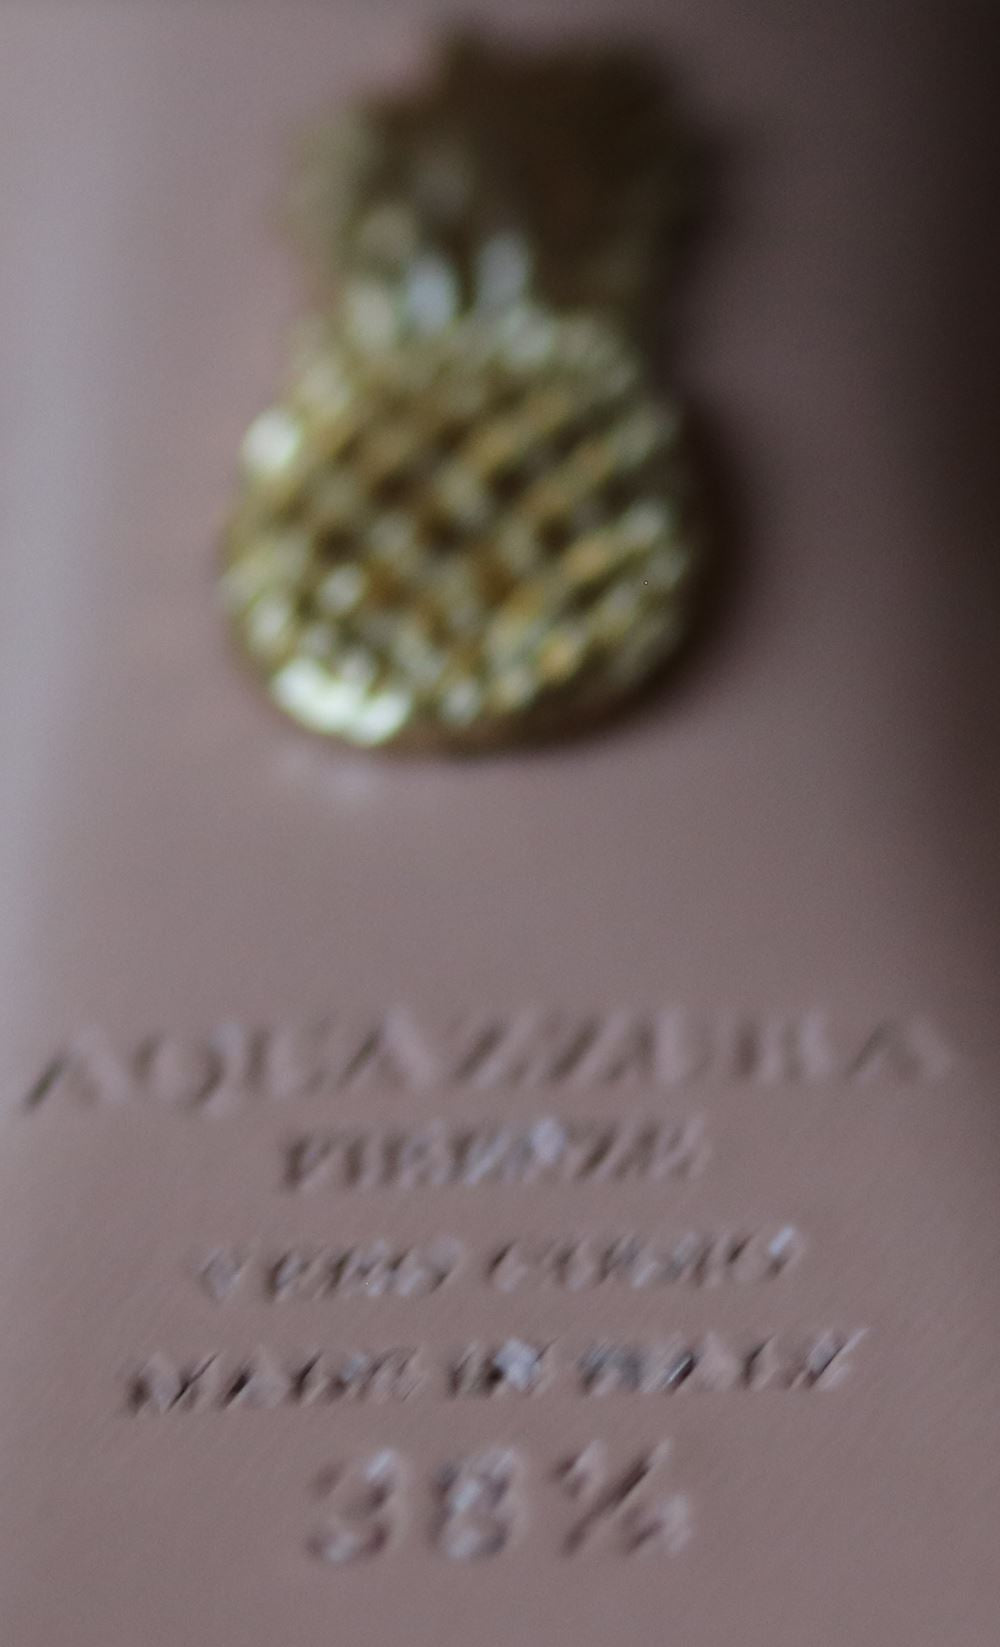 AQUAZZURA SEXY THING SUEDE PLATFORM SANDALS EU 38.5 UK 5.5 US 8.5